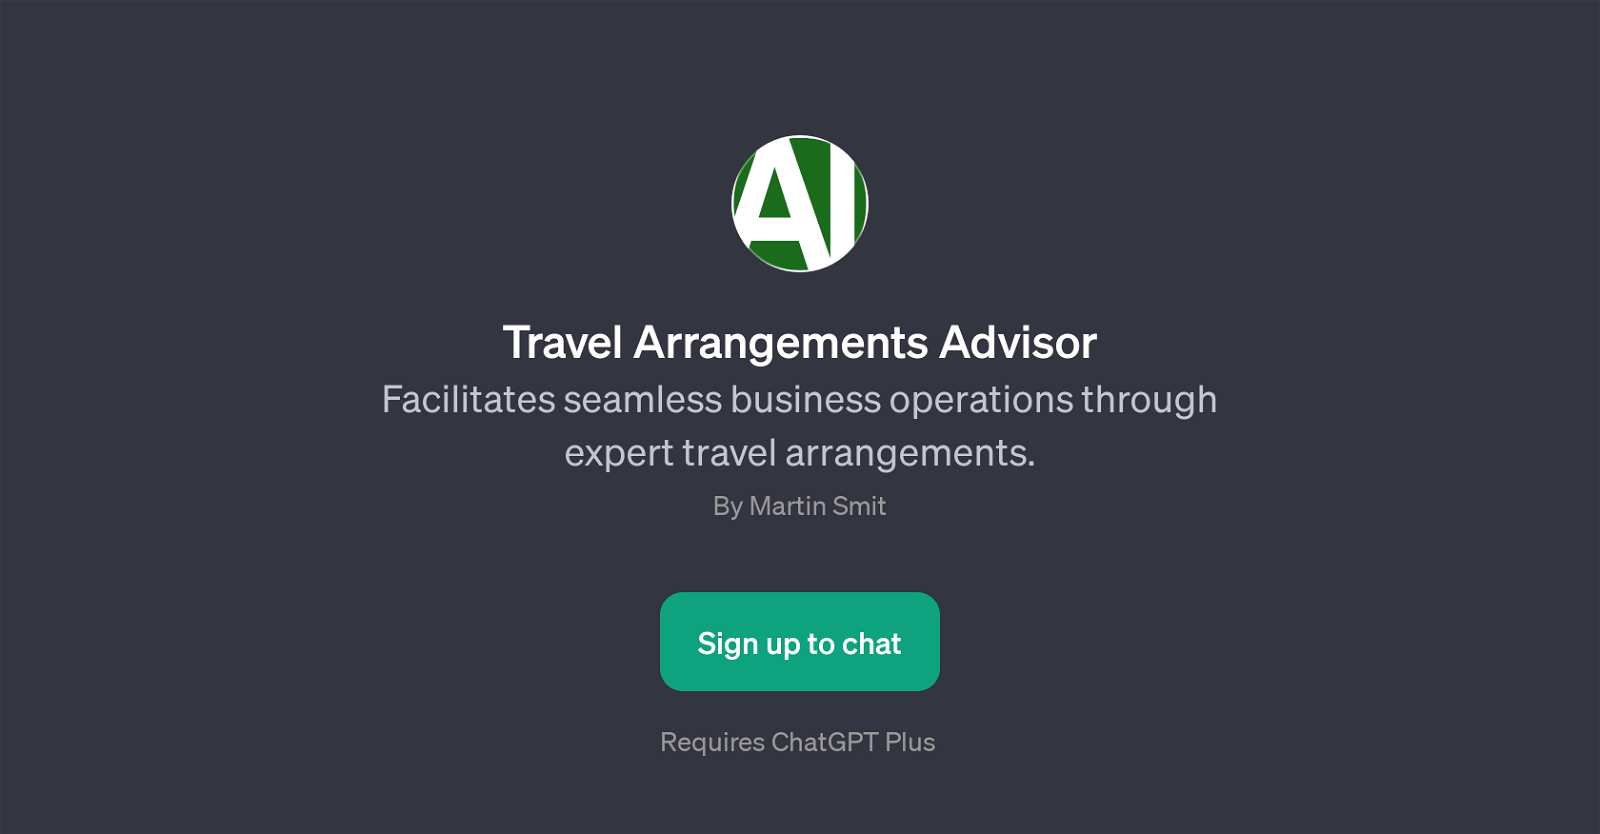 Travel Arrangements Advisor website